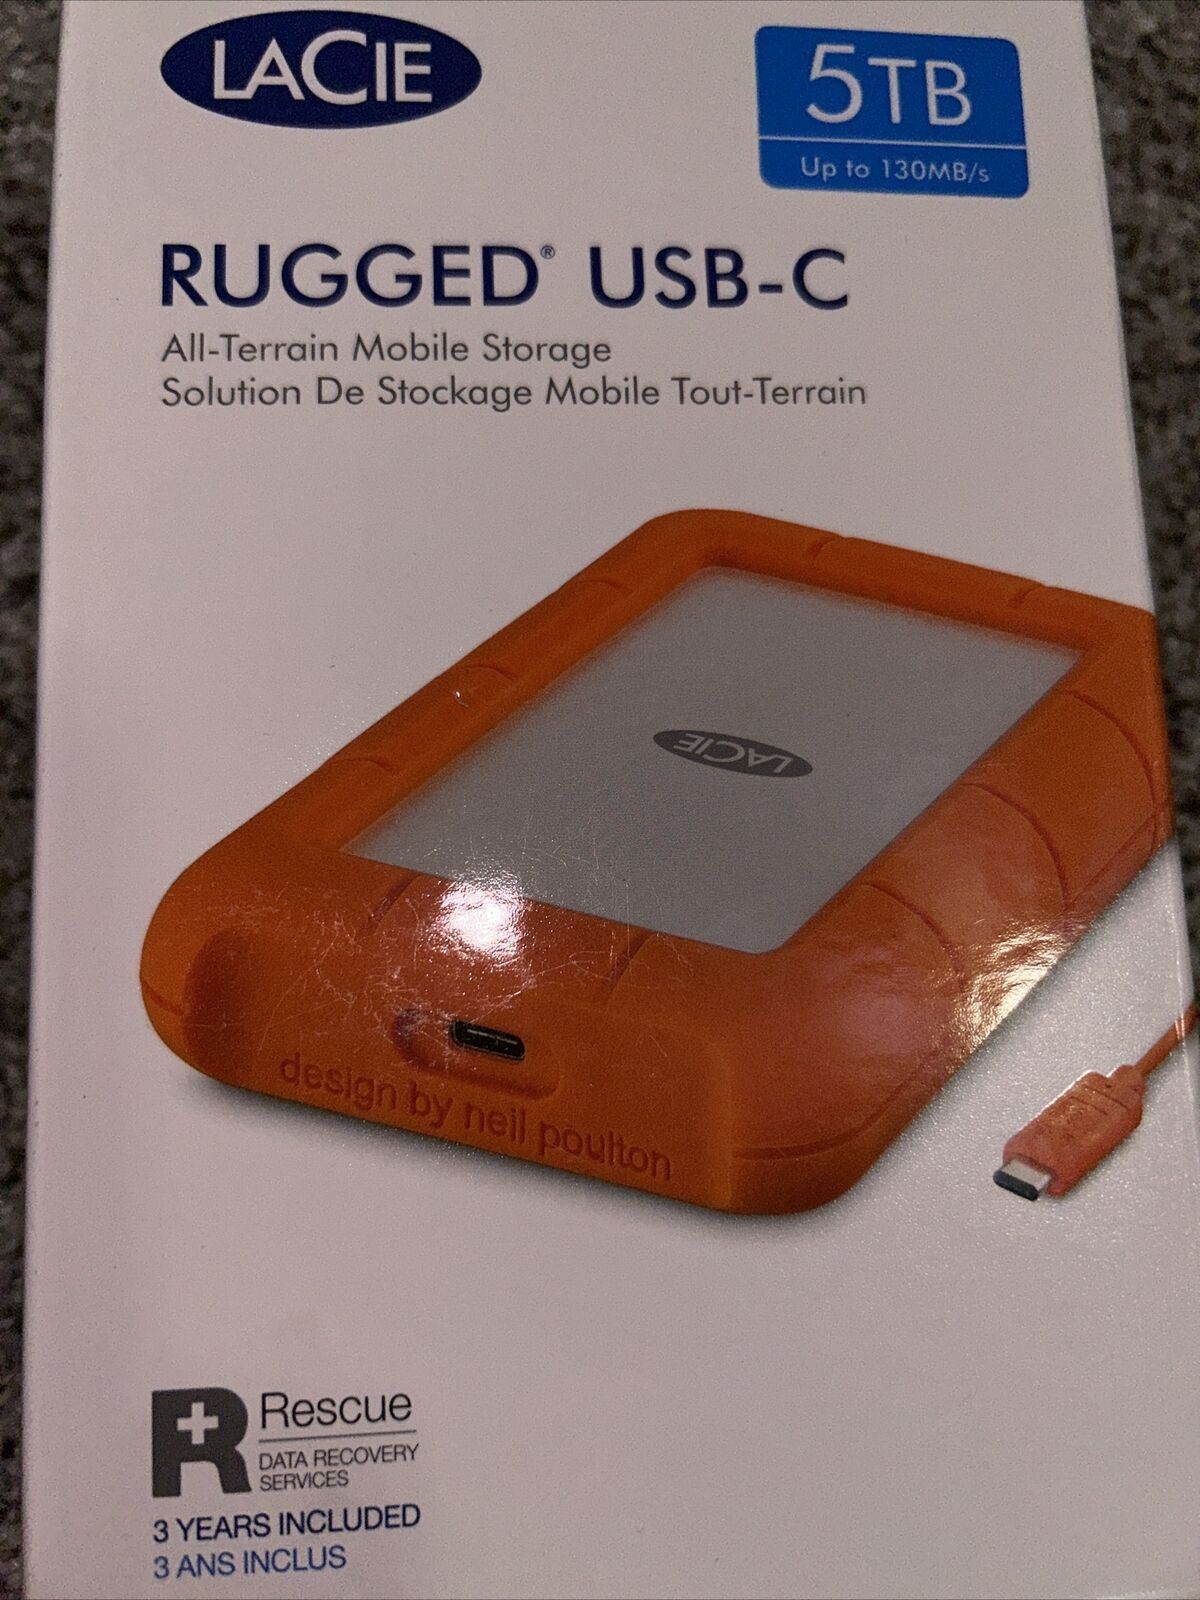 LaCie Rugged USB-C 5TB External USB 3.1 Portable Hard Drive